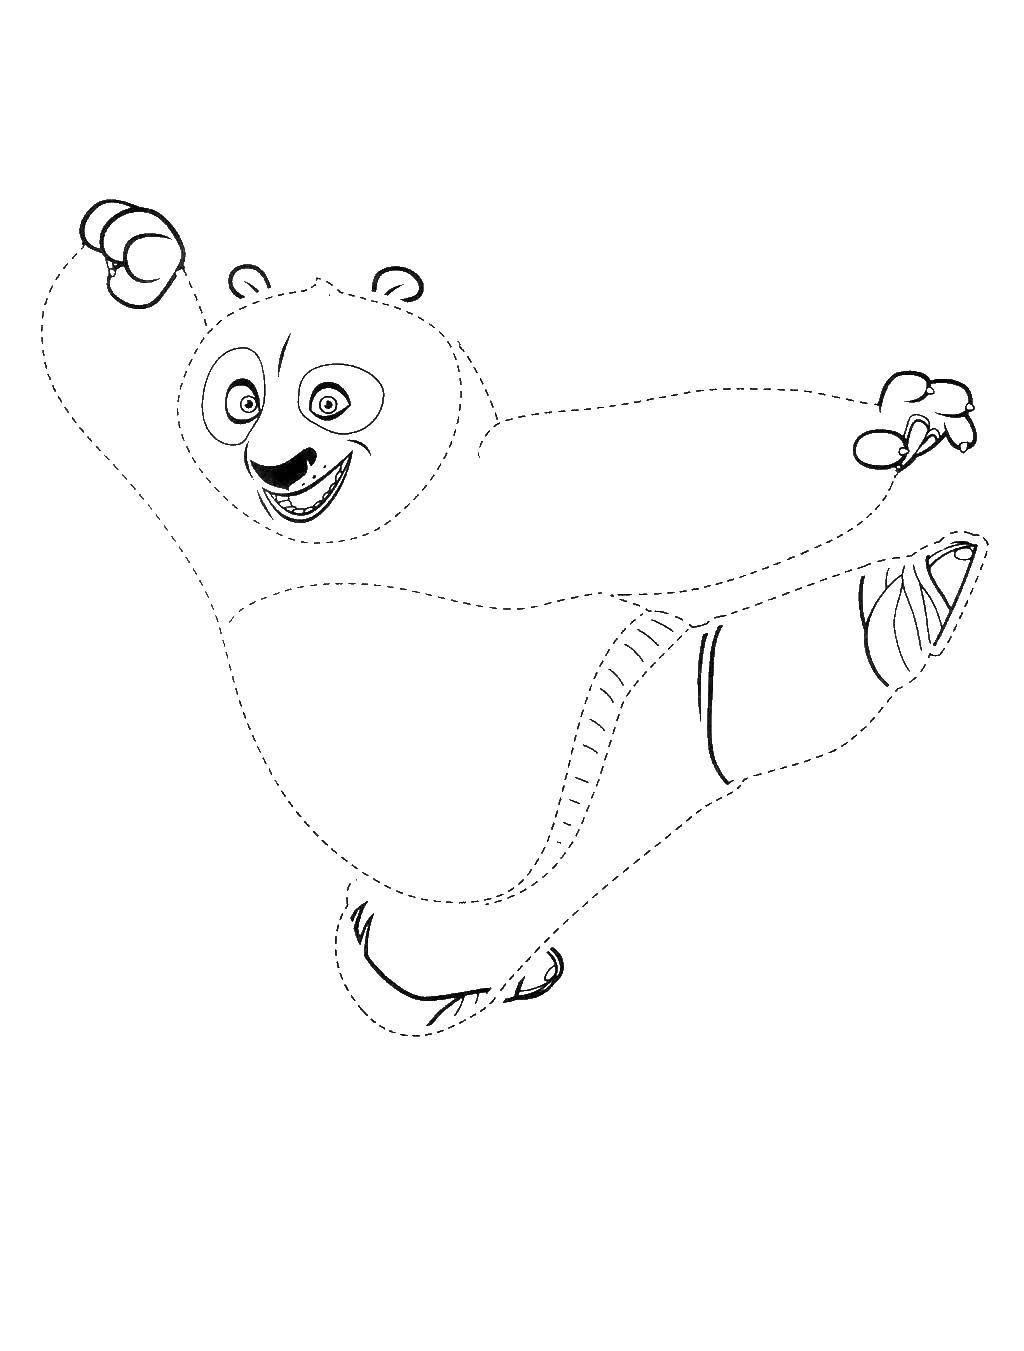 Coloring Panda in the rack. Category kung fu Panda. Tags:  Panda, circle the point.